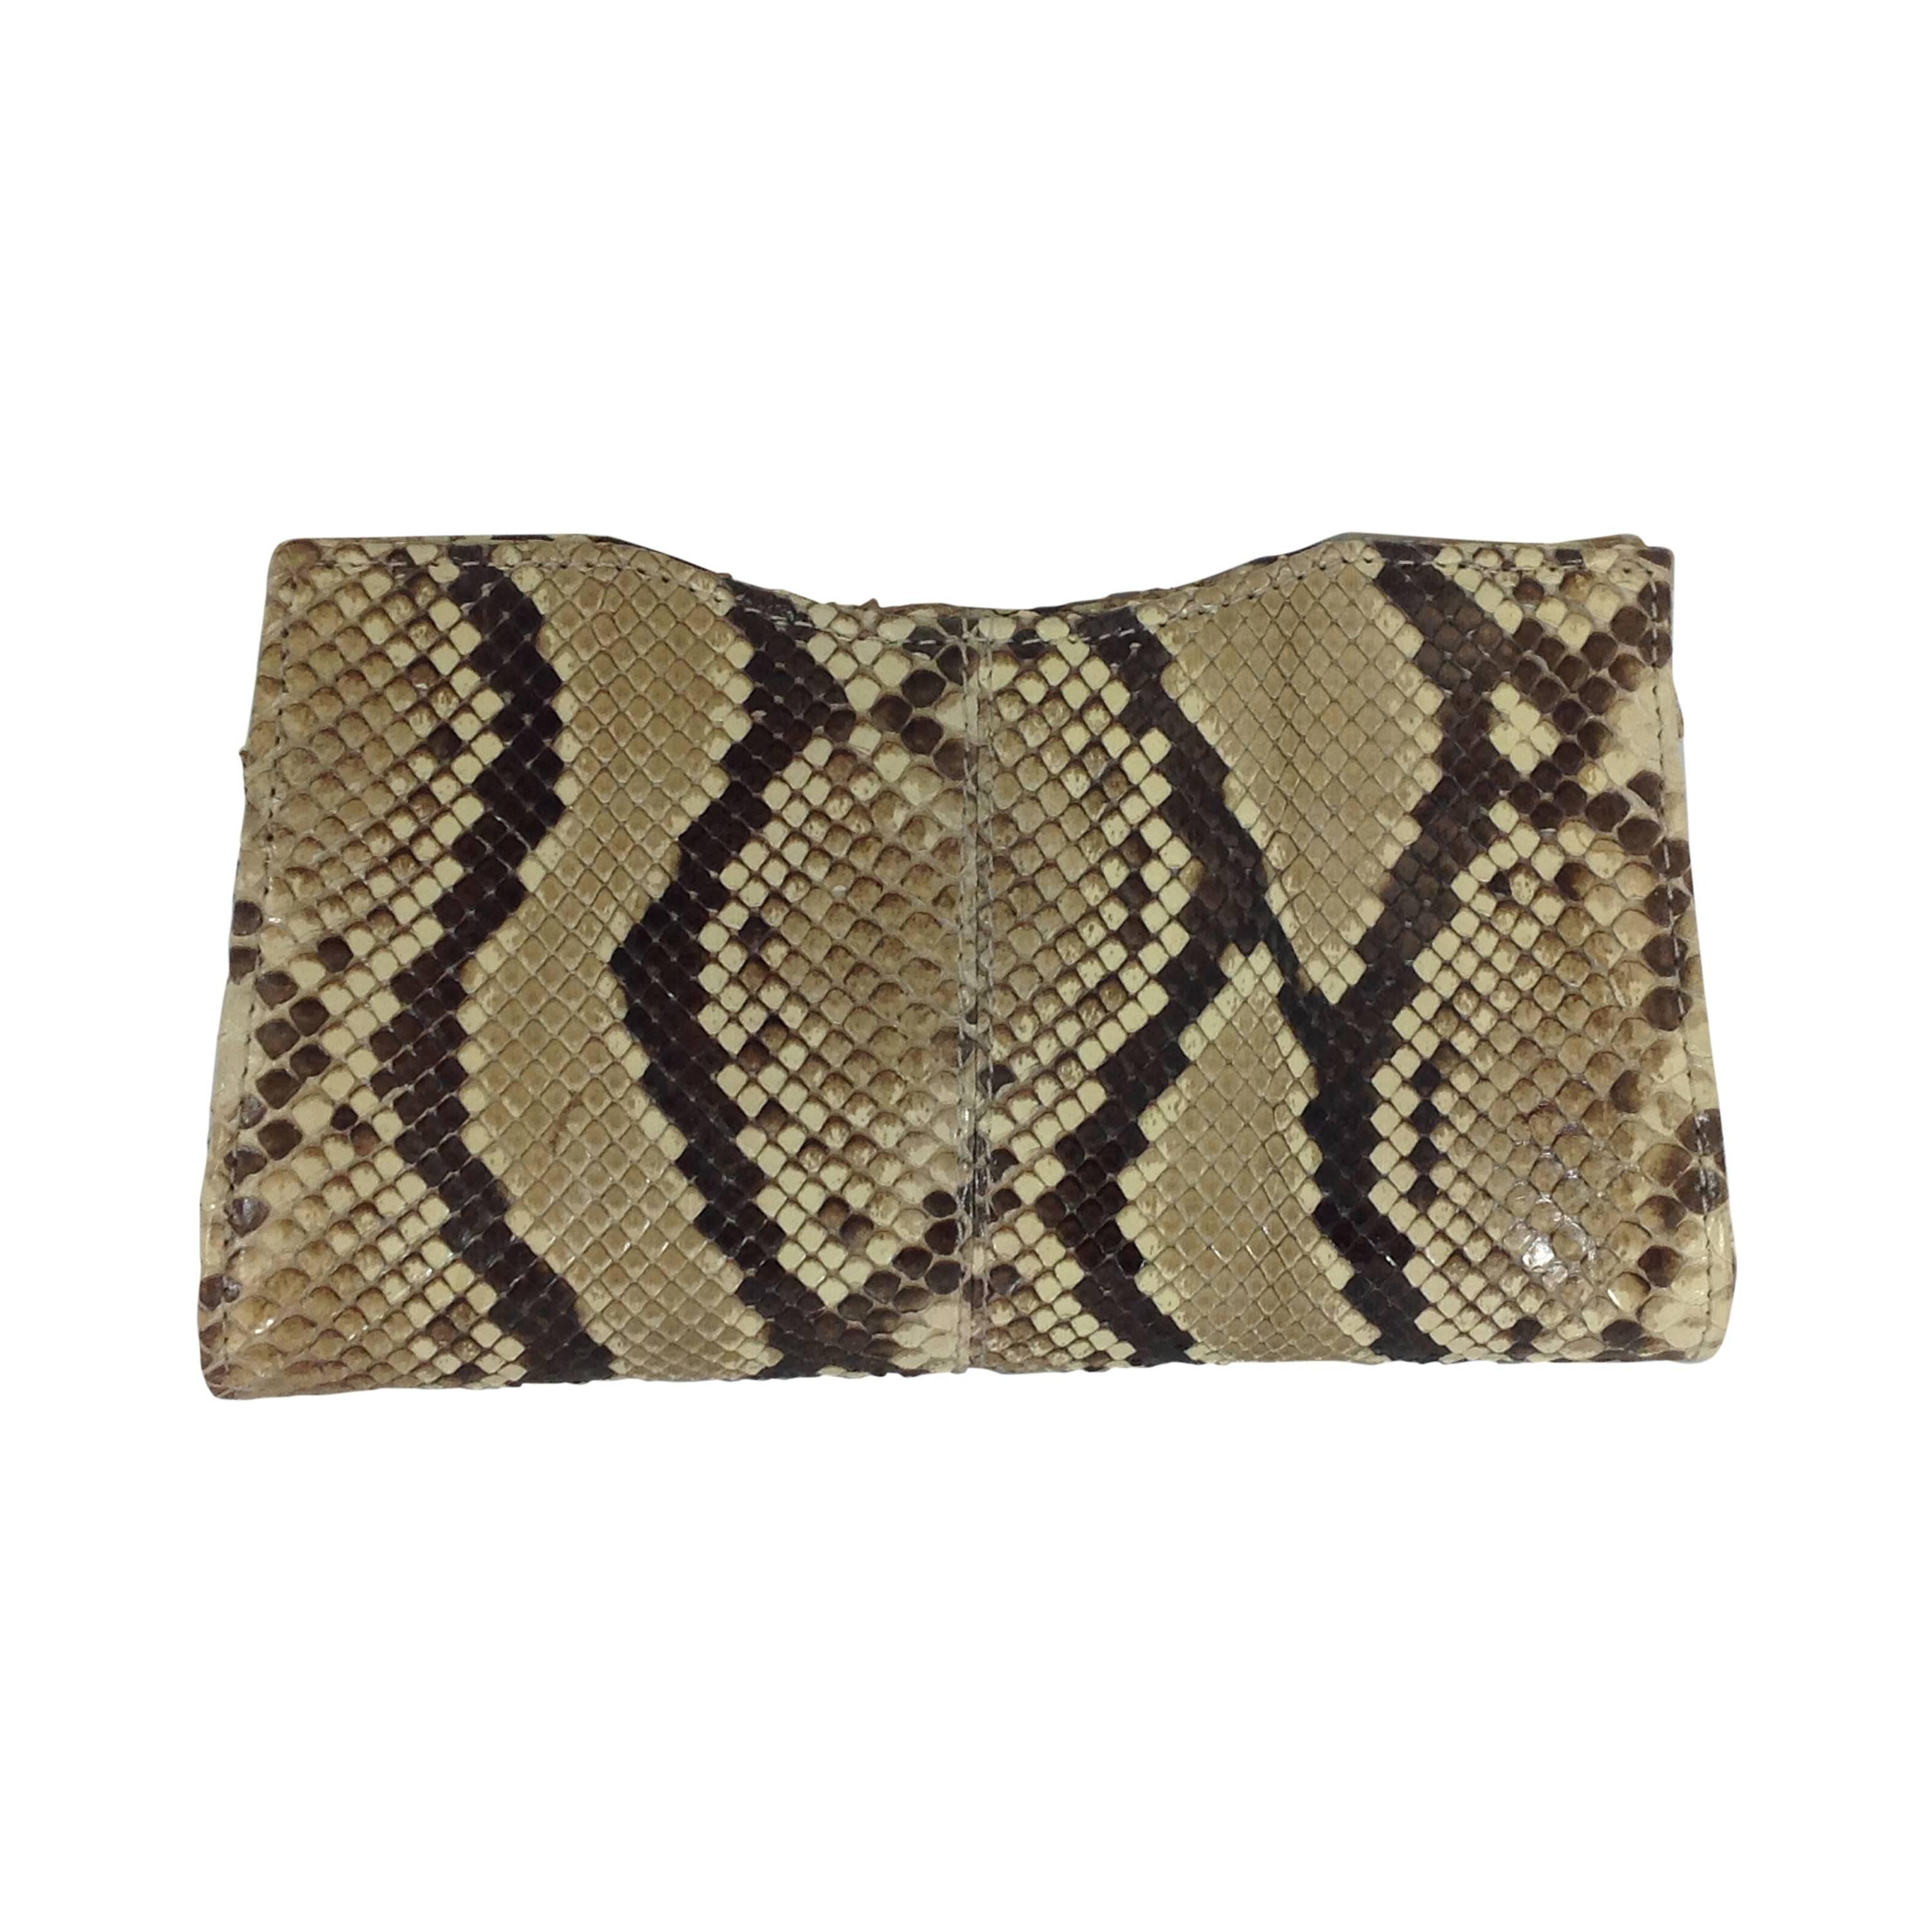 Lai natural python clutch handbag      Perfect For Sale